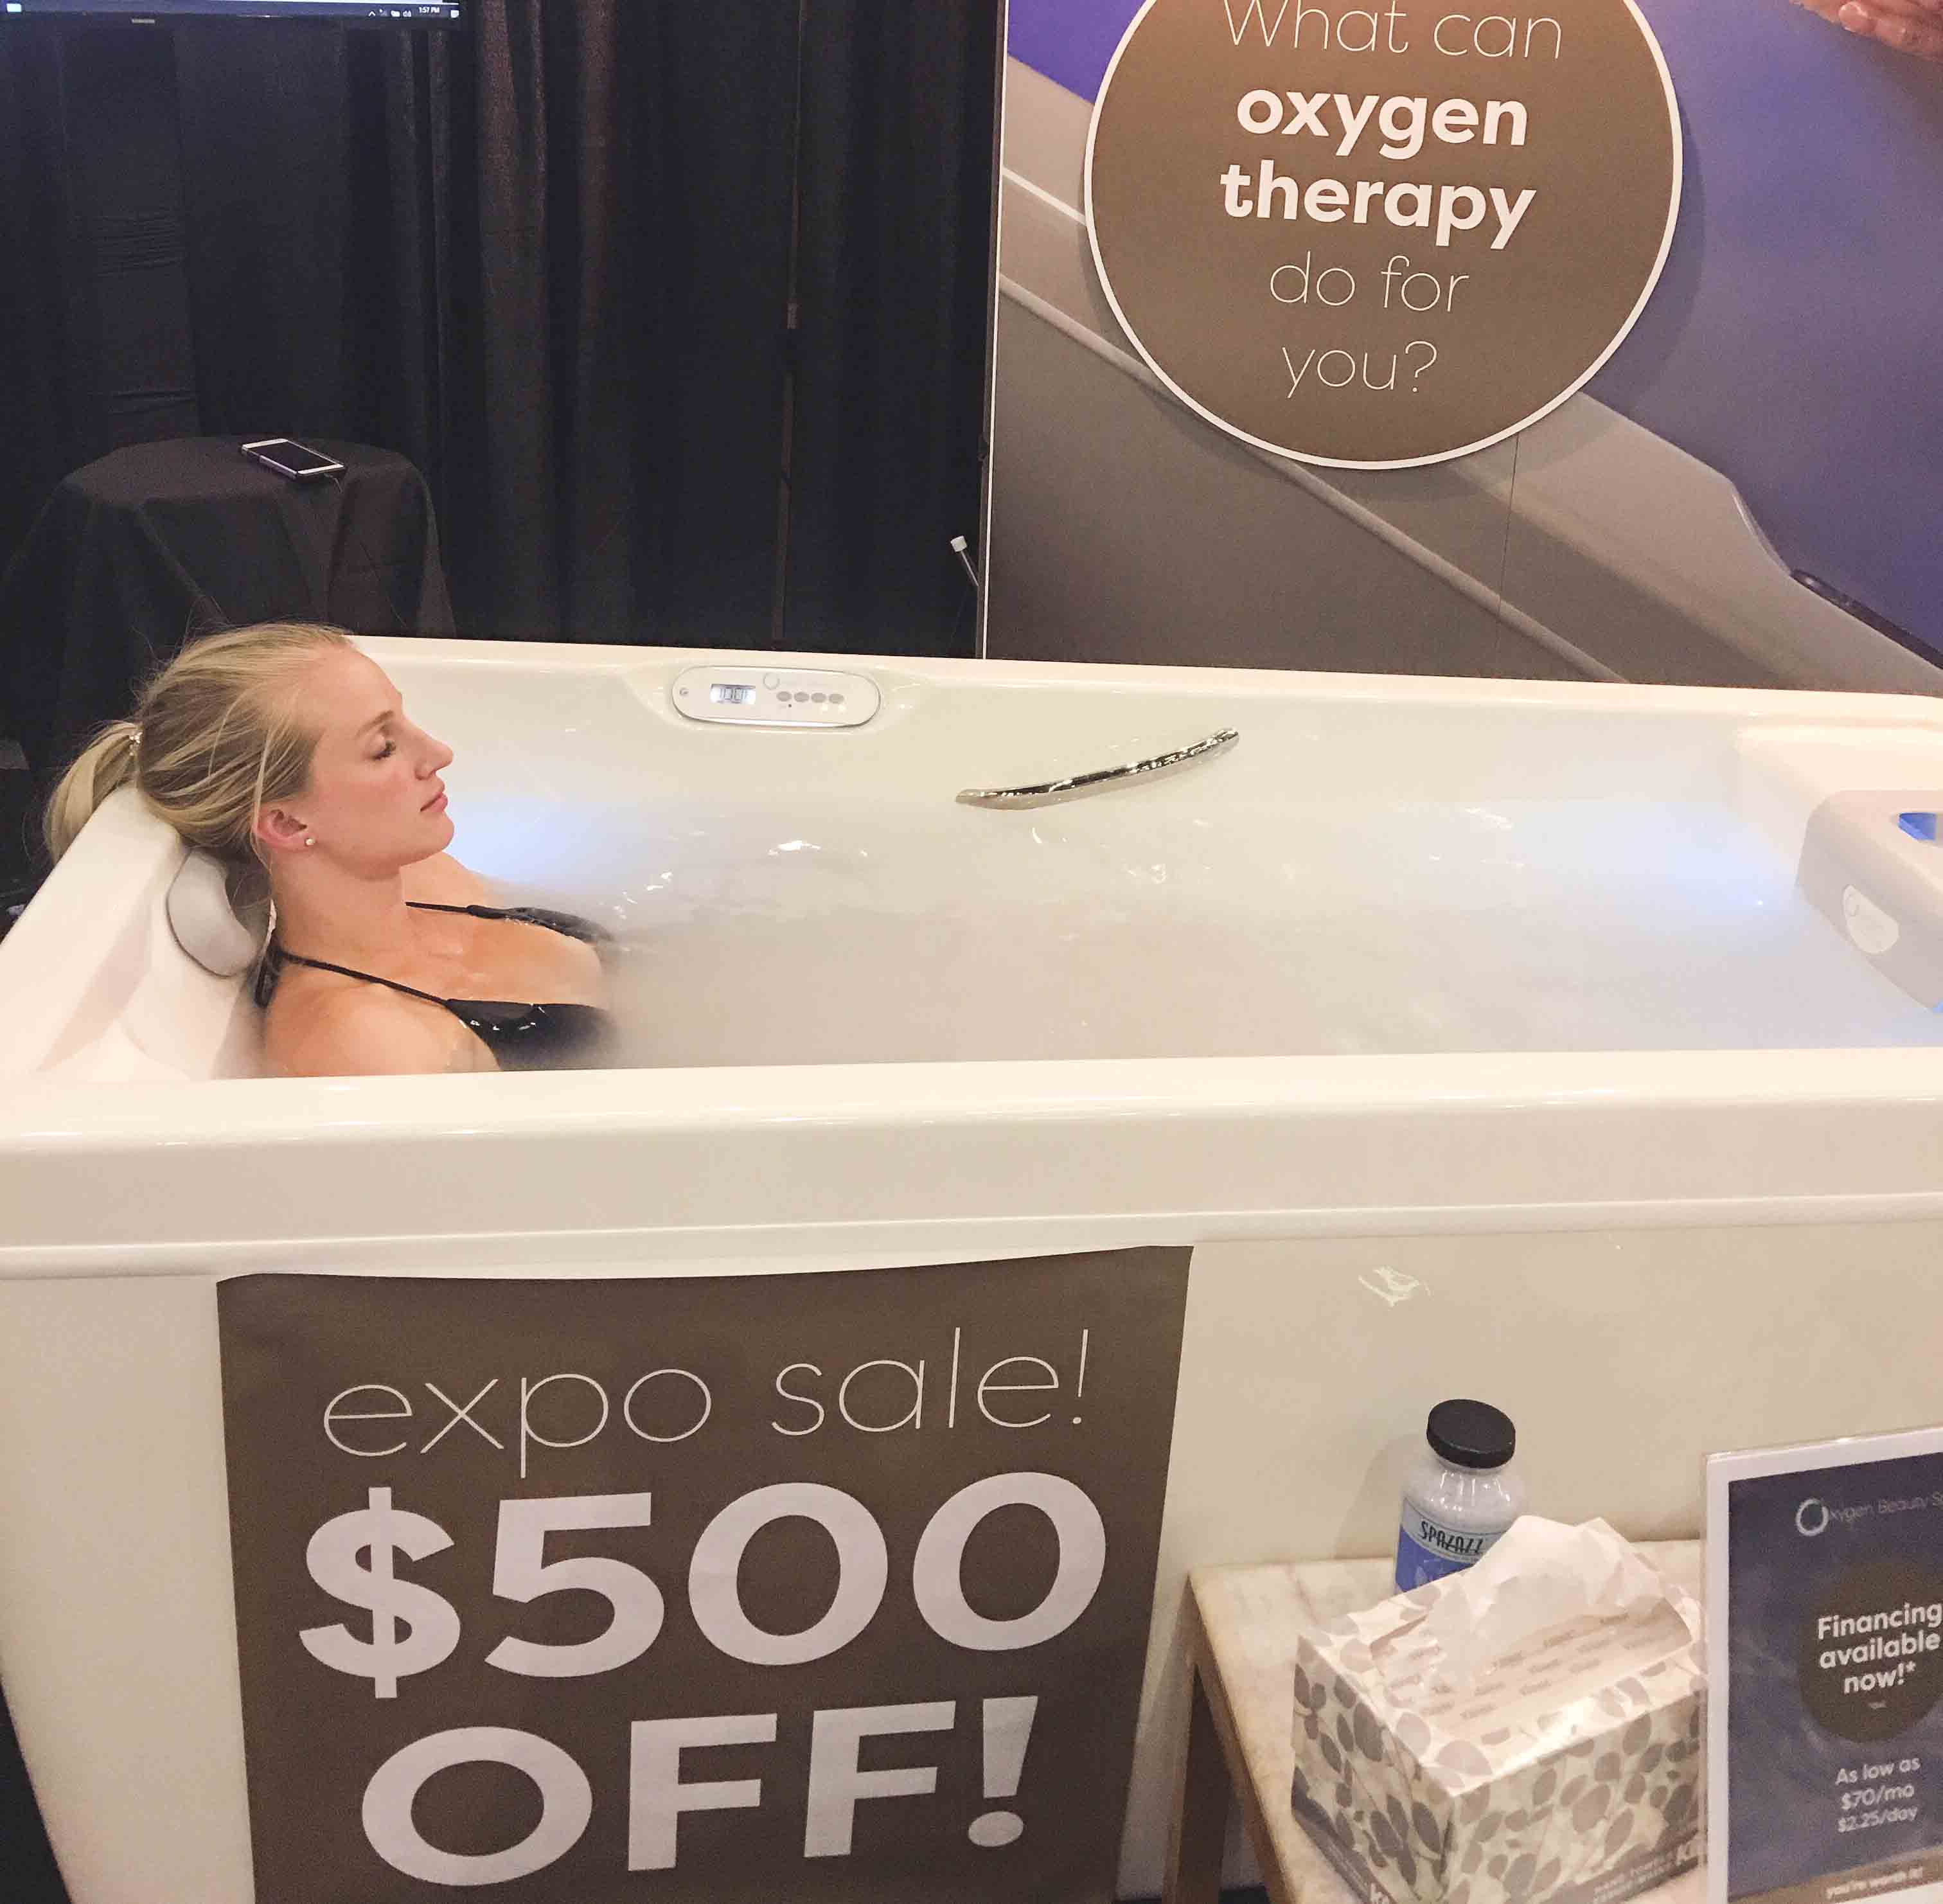 oxygen beauty spa - My Oxygen Spa Experience by Atlanta fitness blogger Happily Hughes